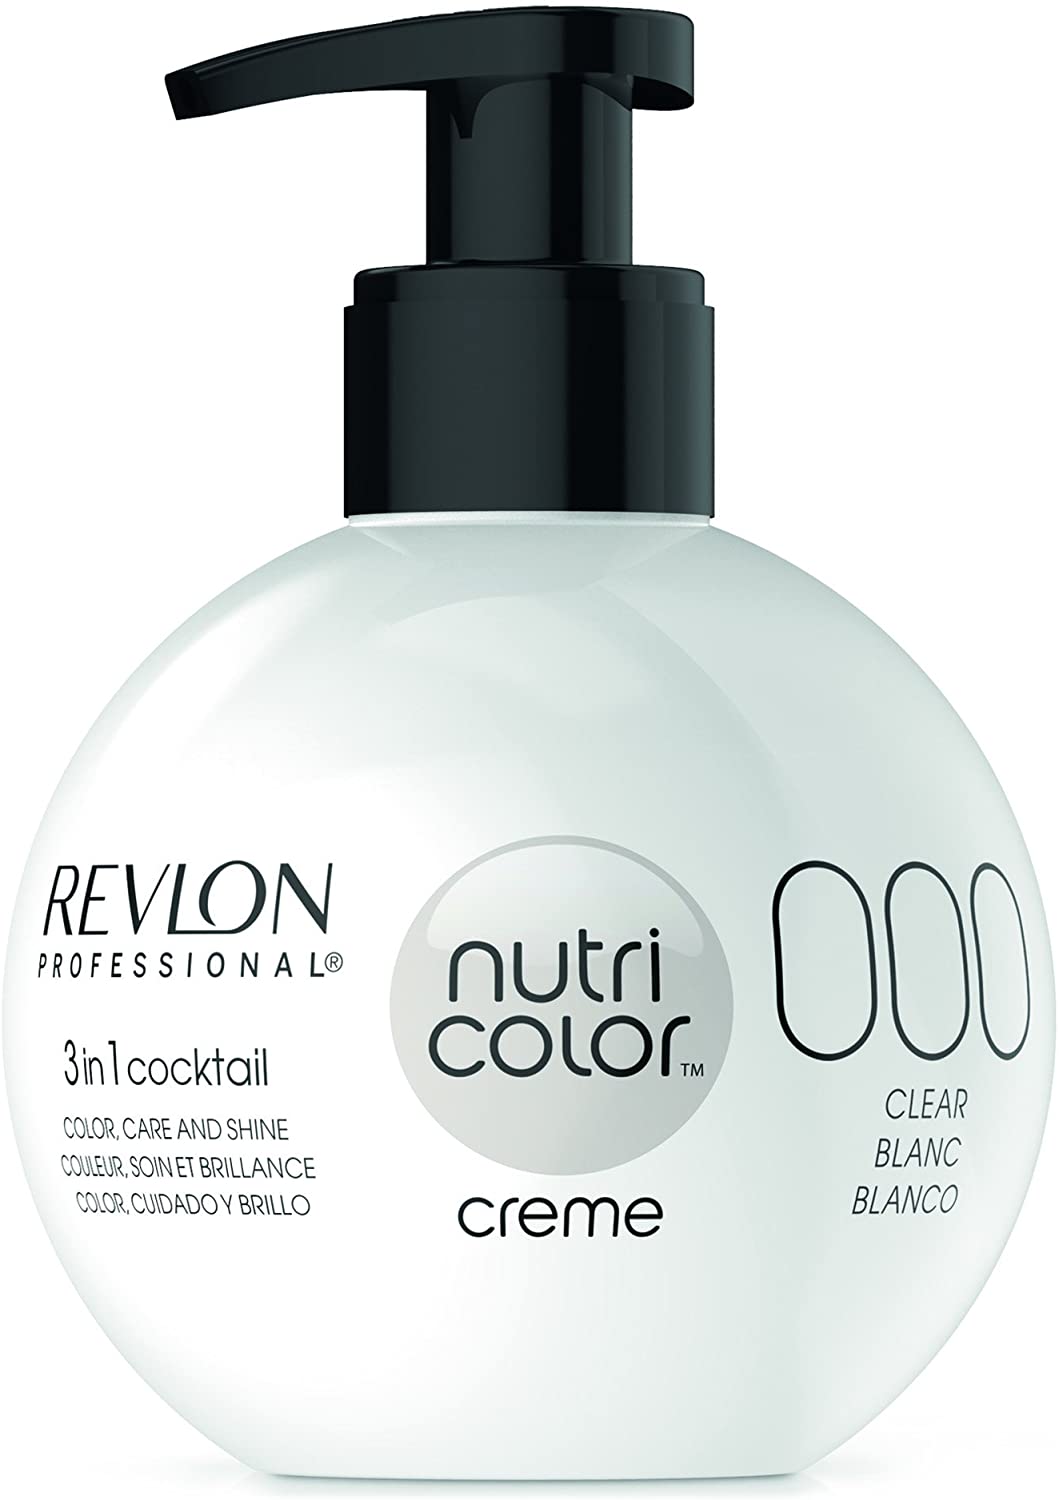 Revlon - Nutri Color Creme - 1022 - Intense Platine - ProCare Outlet by Revlon